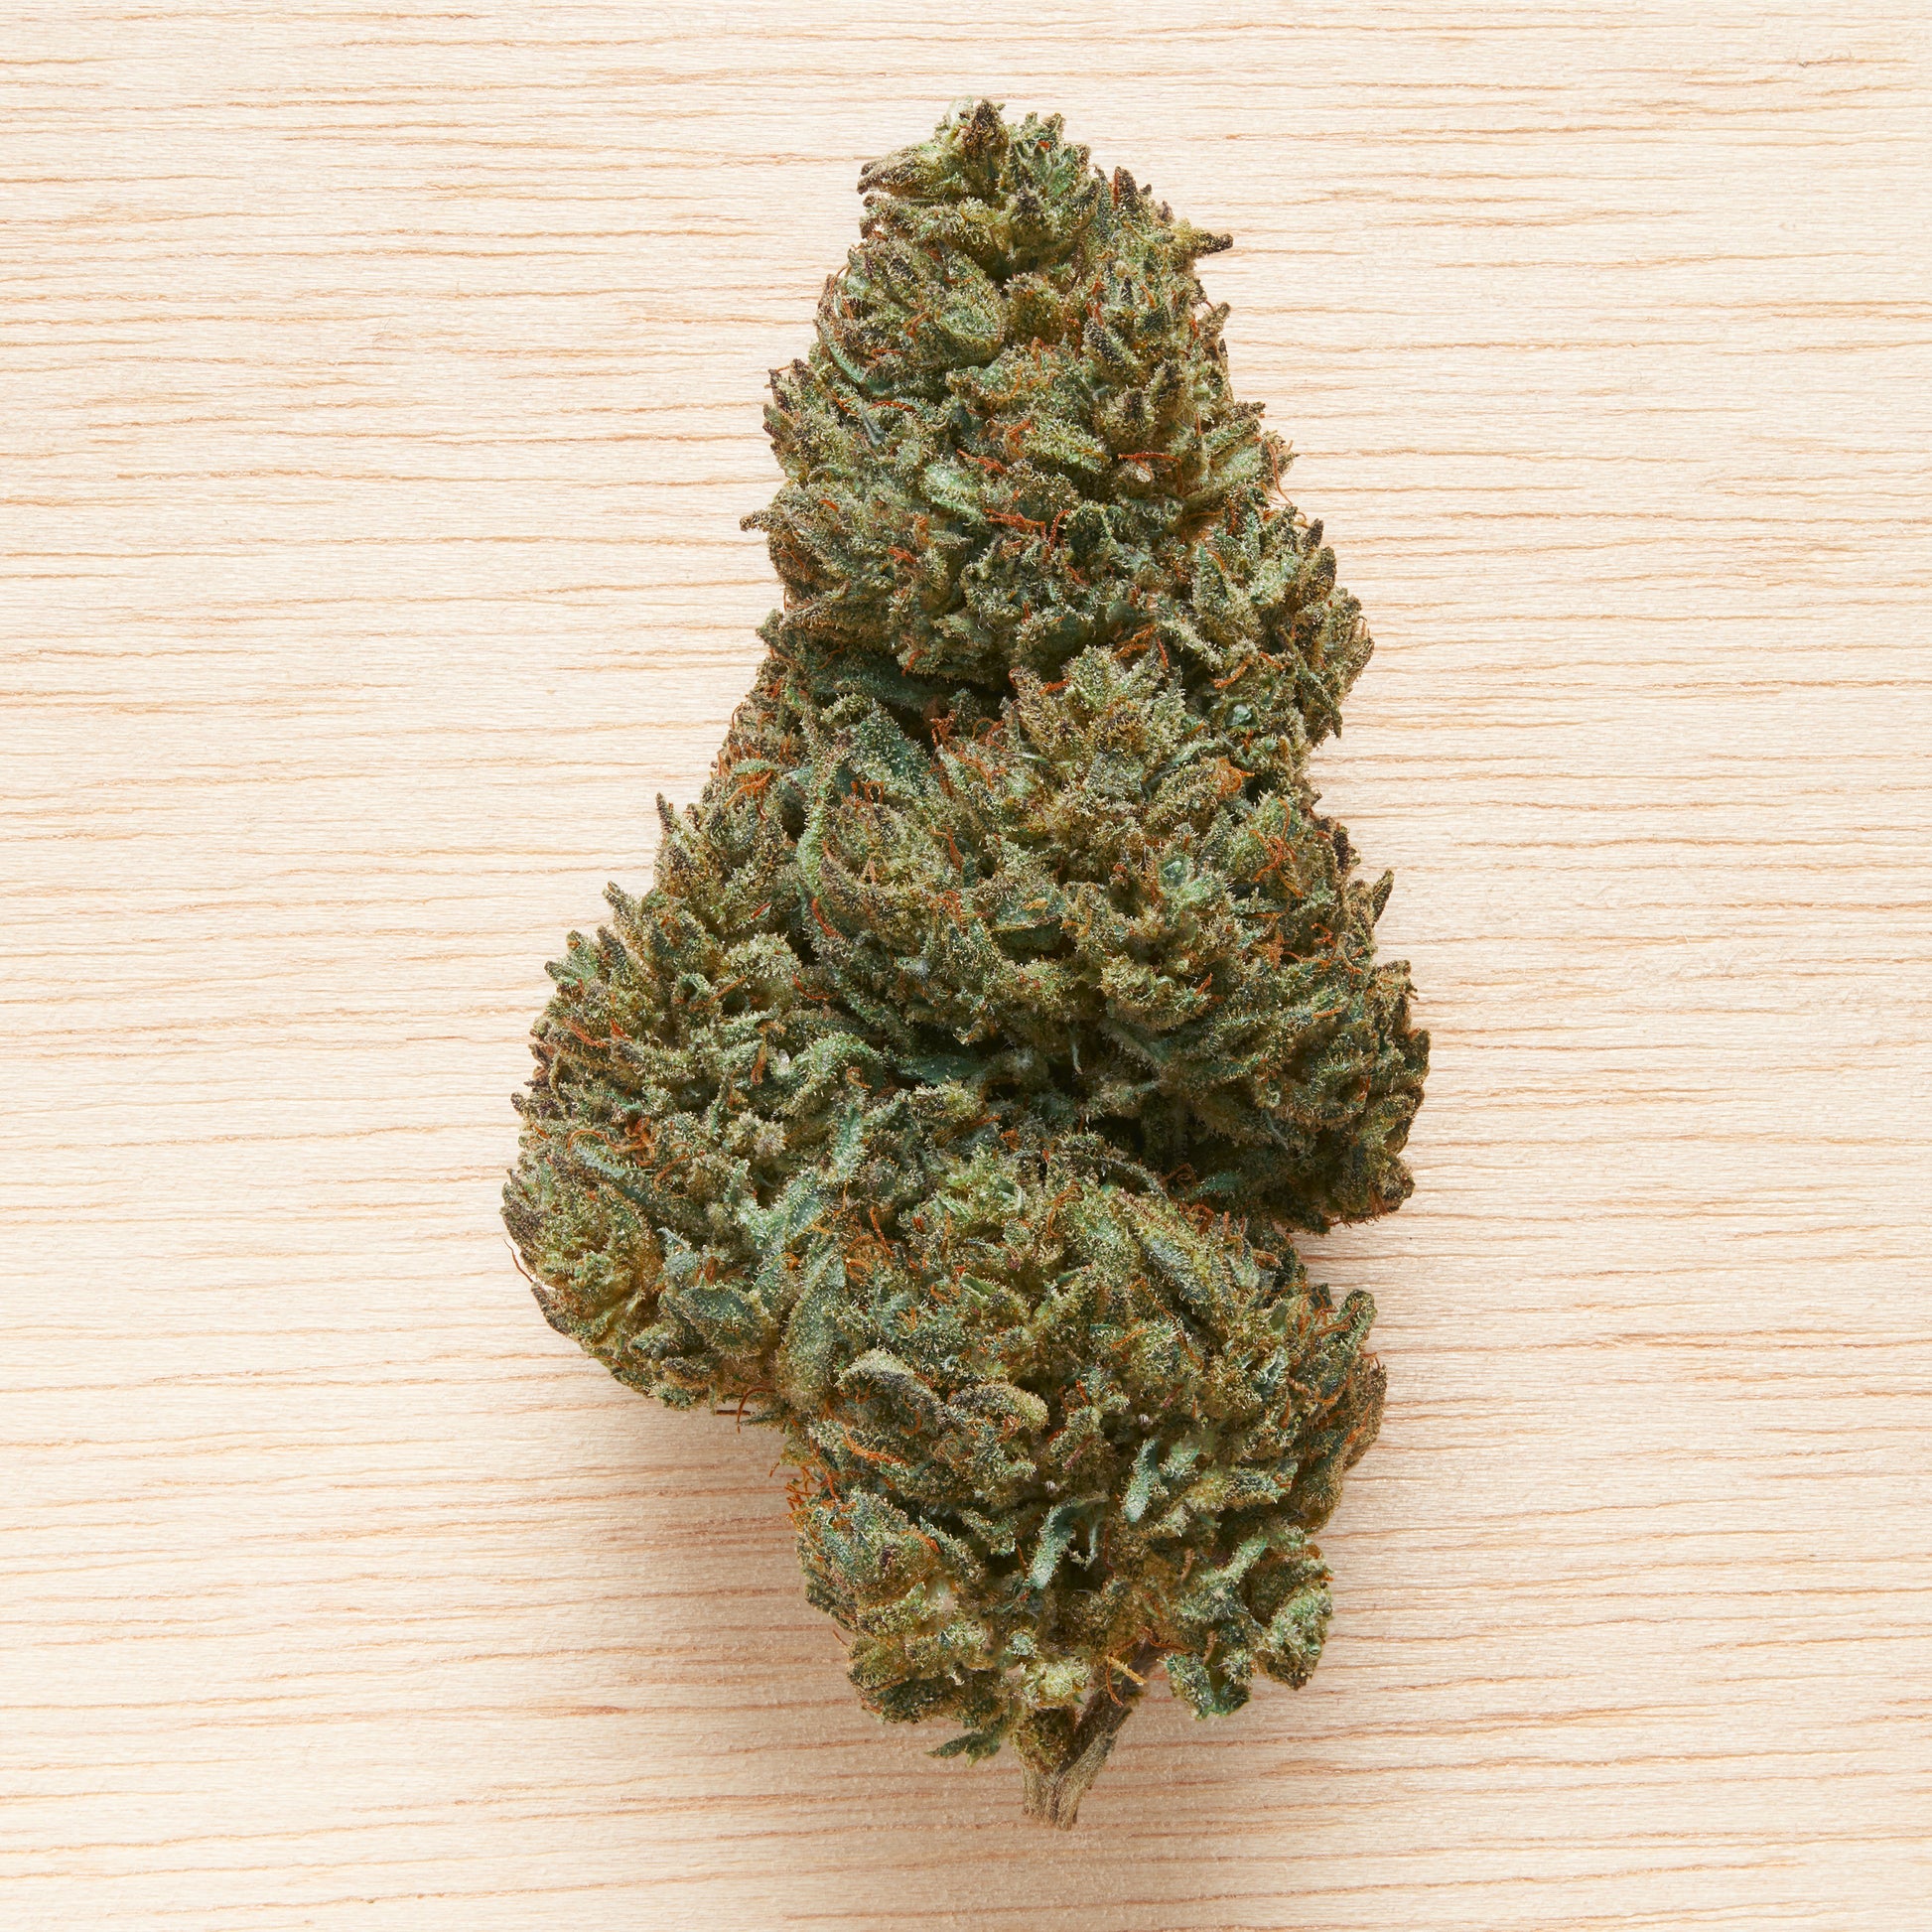 cannabis flower nugs buds legal to ship